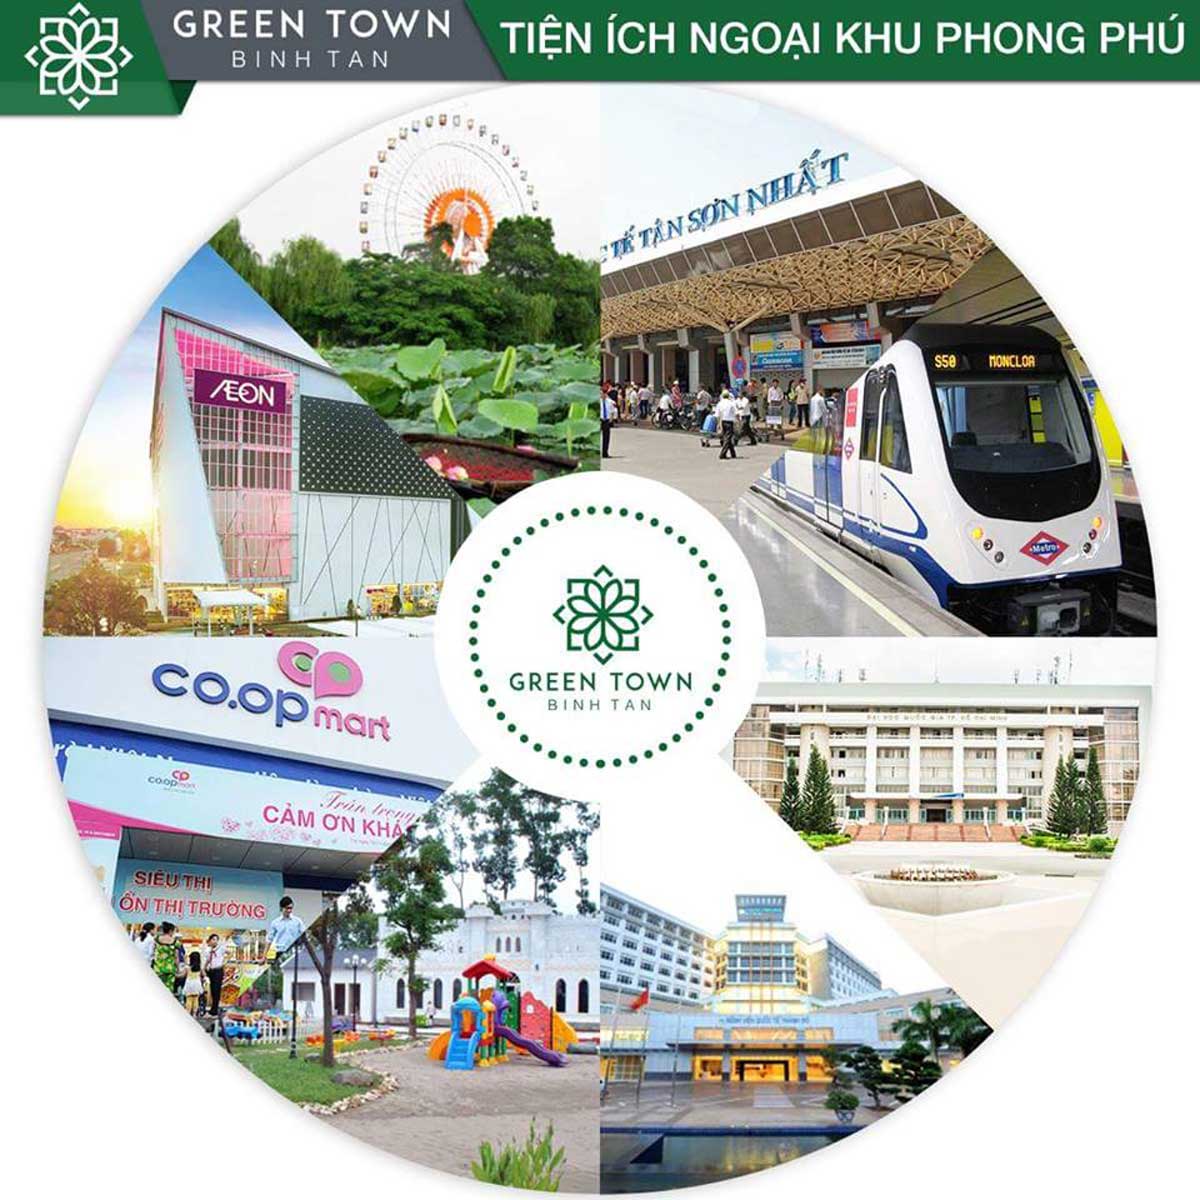 tien ich ngoai khu du an green town - GREEN TOWN BÌNH TÂN